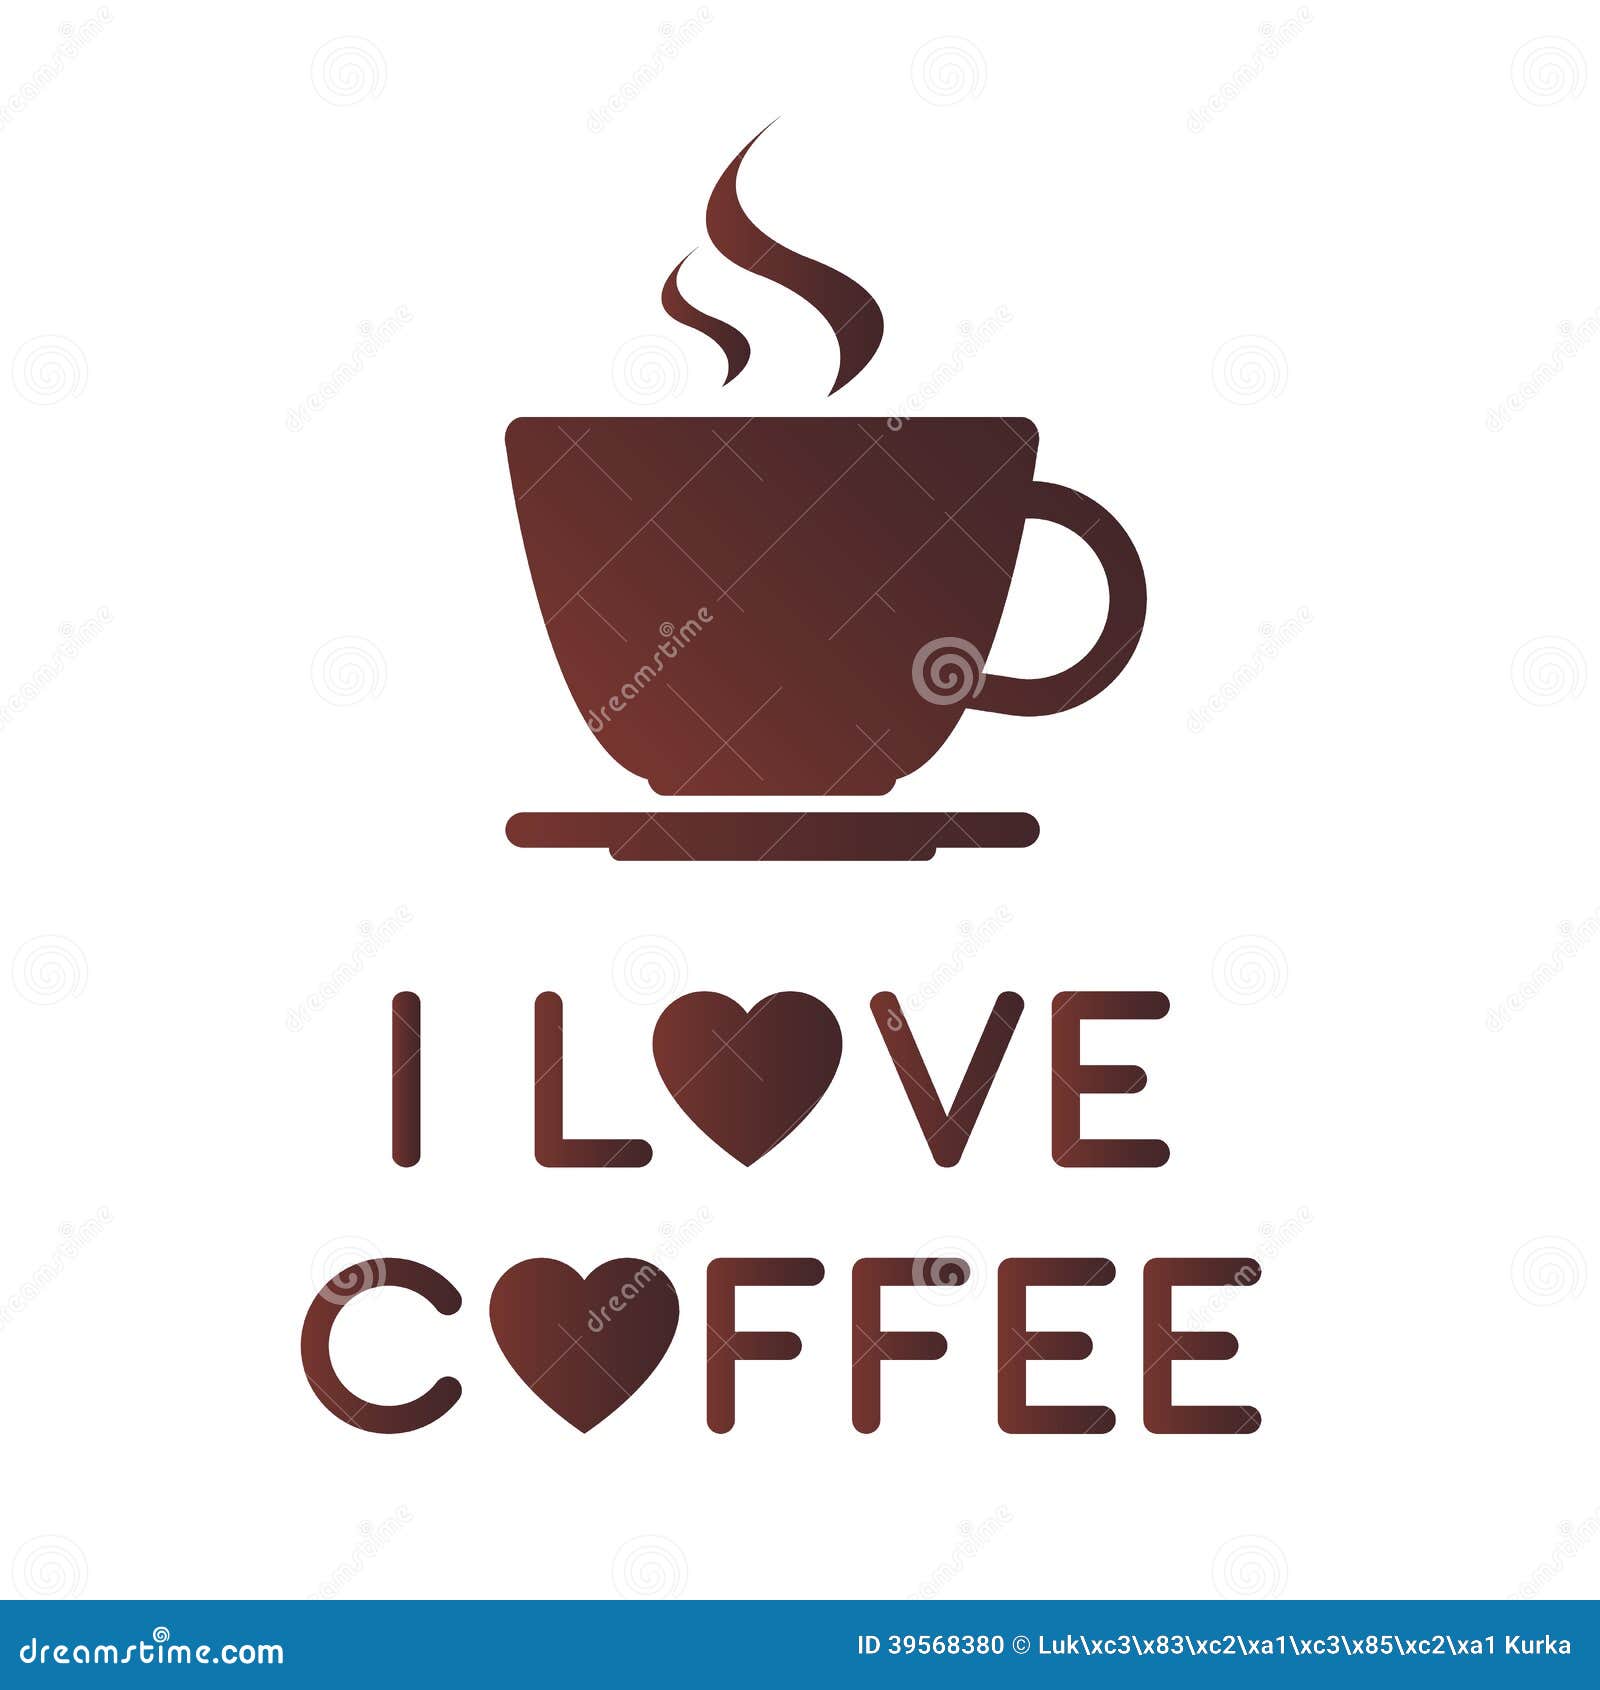 I love coffee. Я люблю кофе. Надпись я люблю кофе. Кофе я люблю кофе. Я люблю кофе картинки.